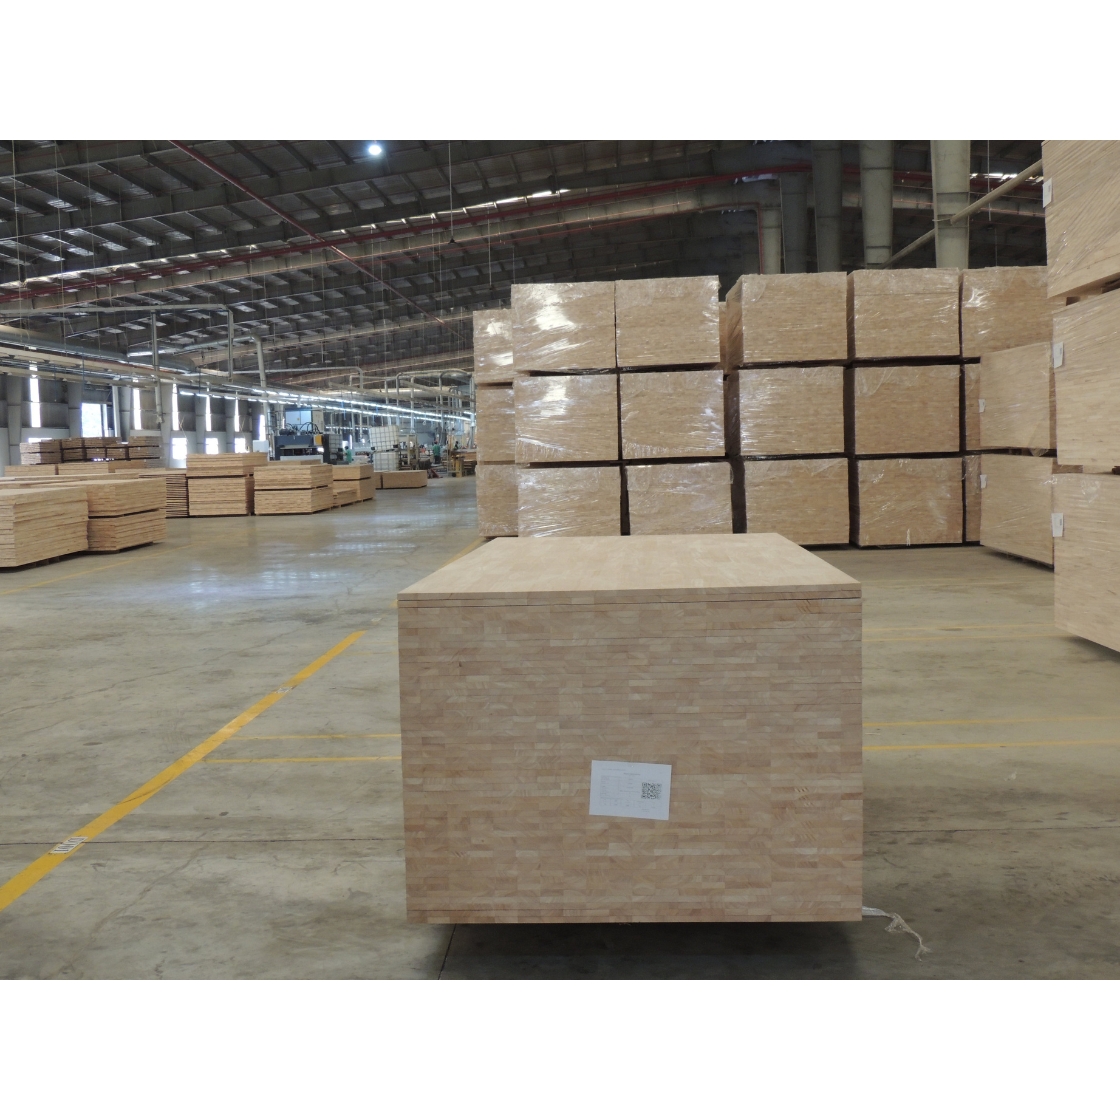 Warranty 1 Year Professional Team Export Cabinet Doors Frame And Components Fsc-Coc Plastic Bag Vietnam Manufacturer